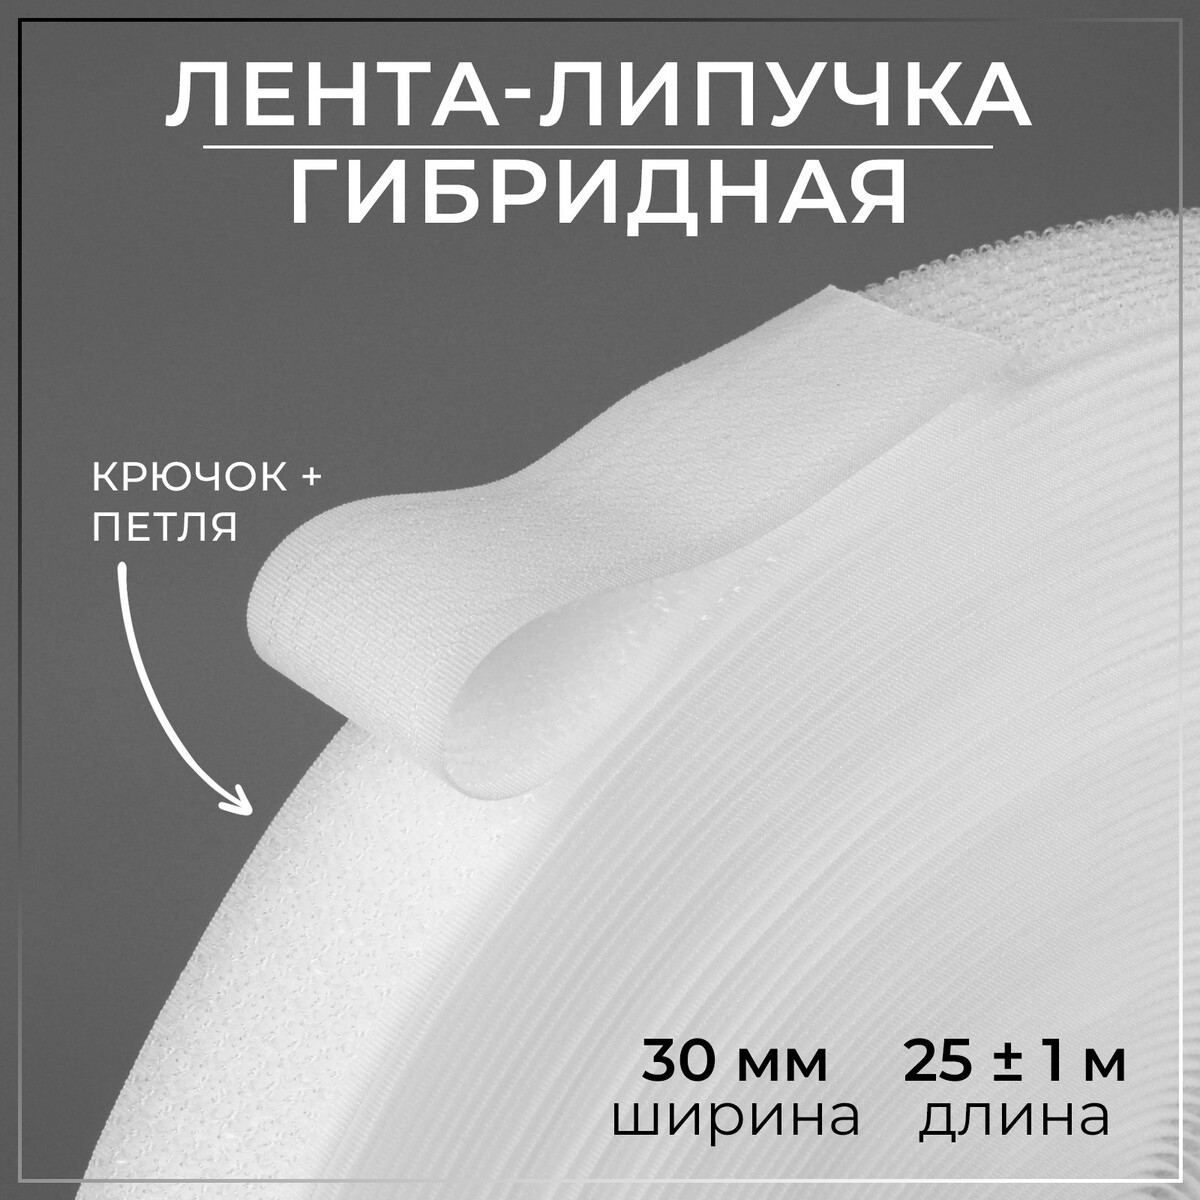 Липучка гибридная, 30 мм × 25 ± 1 м, цвет белый липучка 20 мм × 25 ± 1 м белый